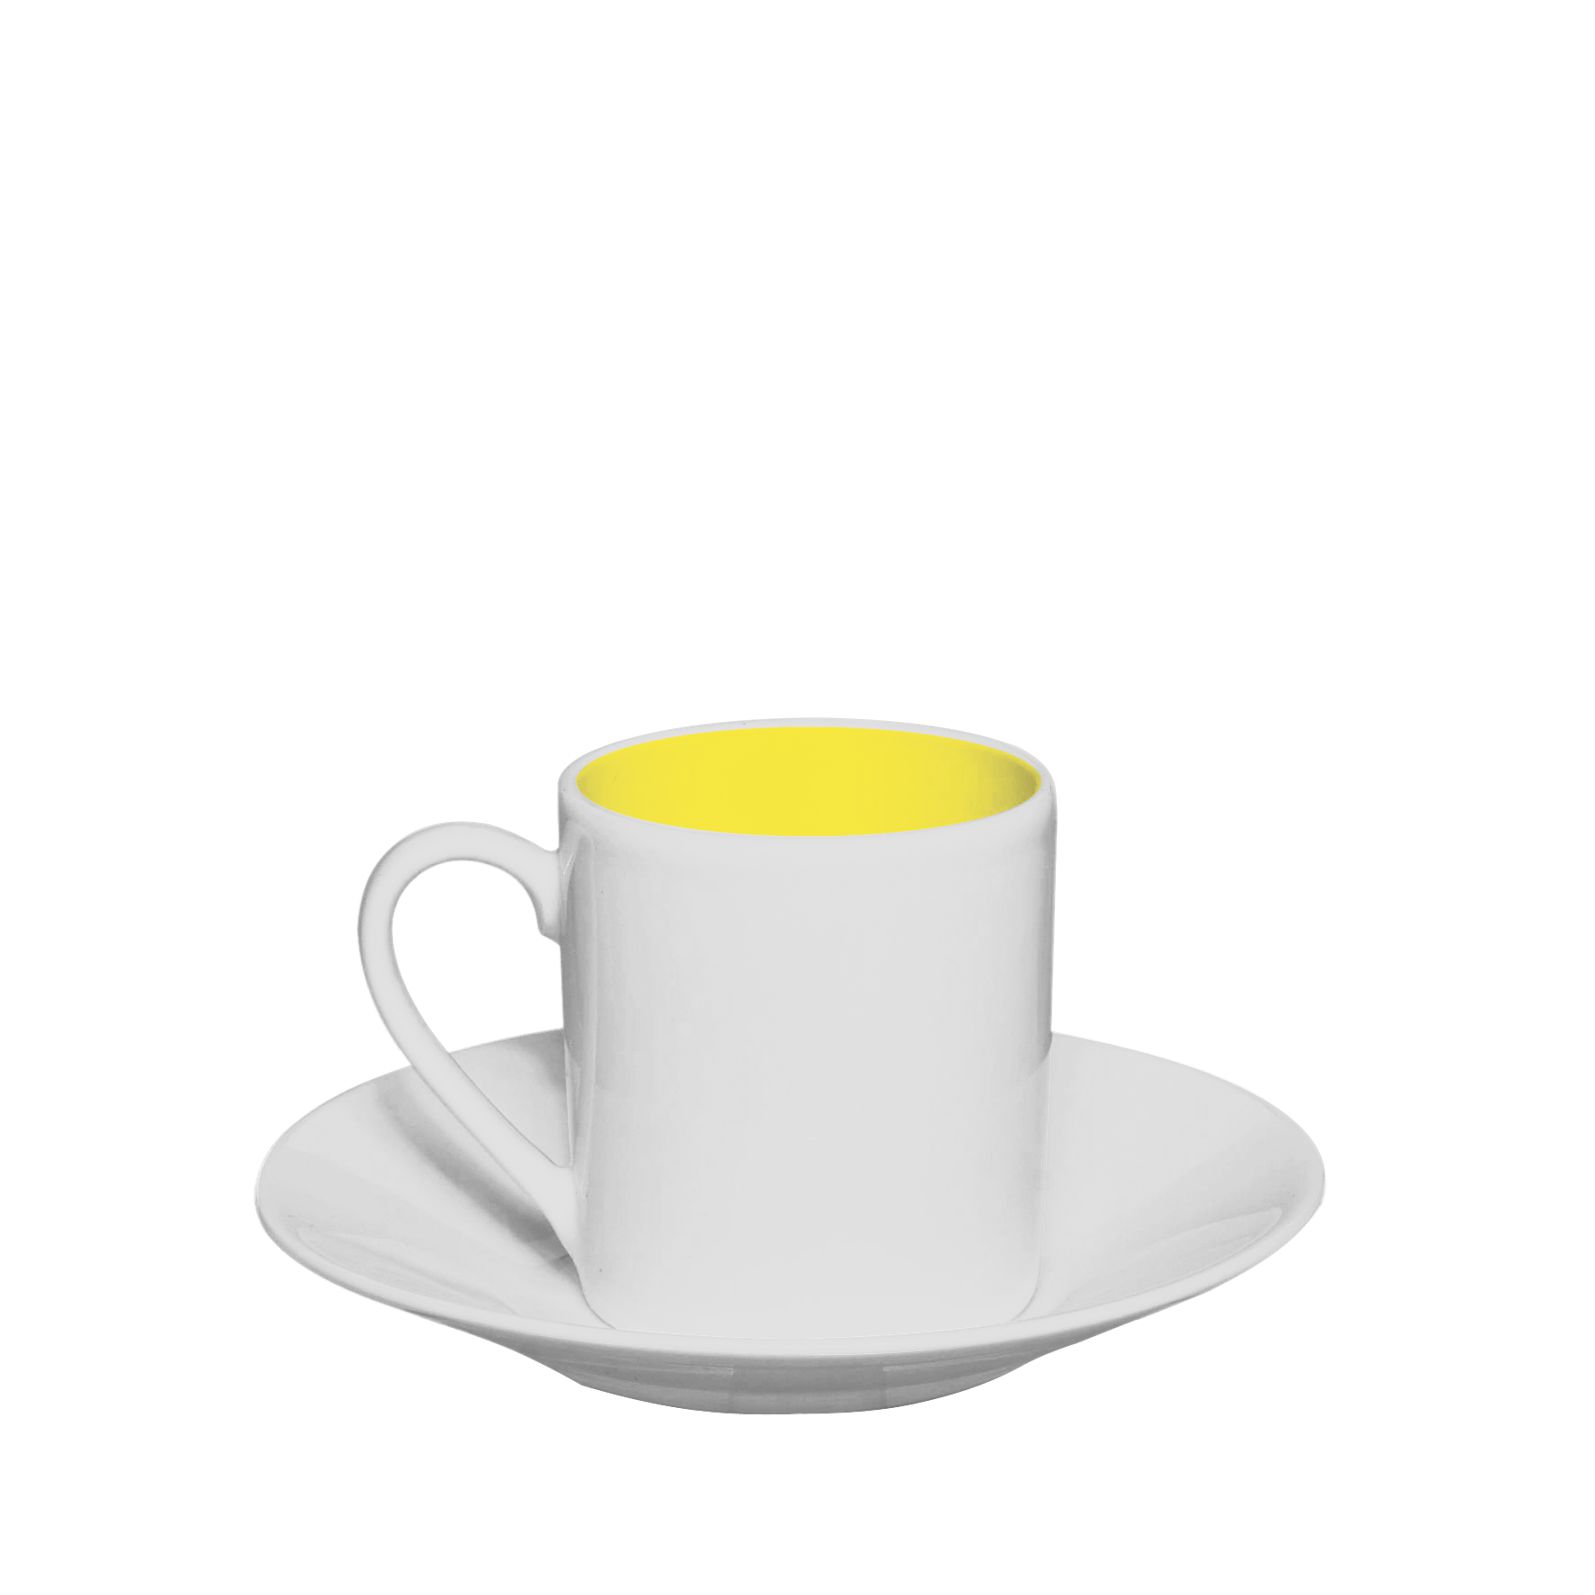 /sites/default/files/2020-03/Fili%C5%BCanka_classic_espresso_white-yellow.jpg